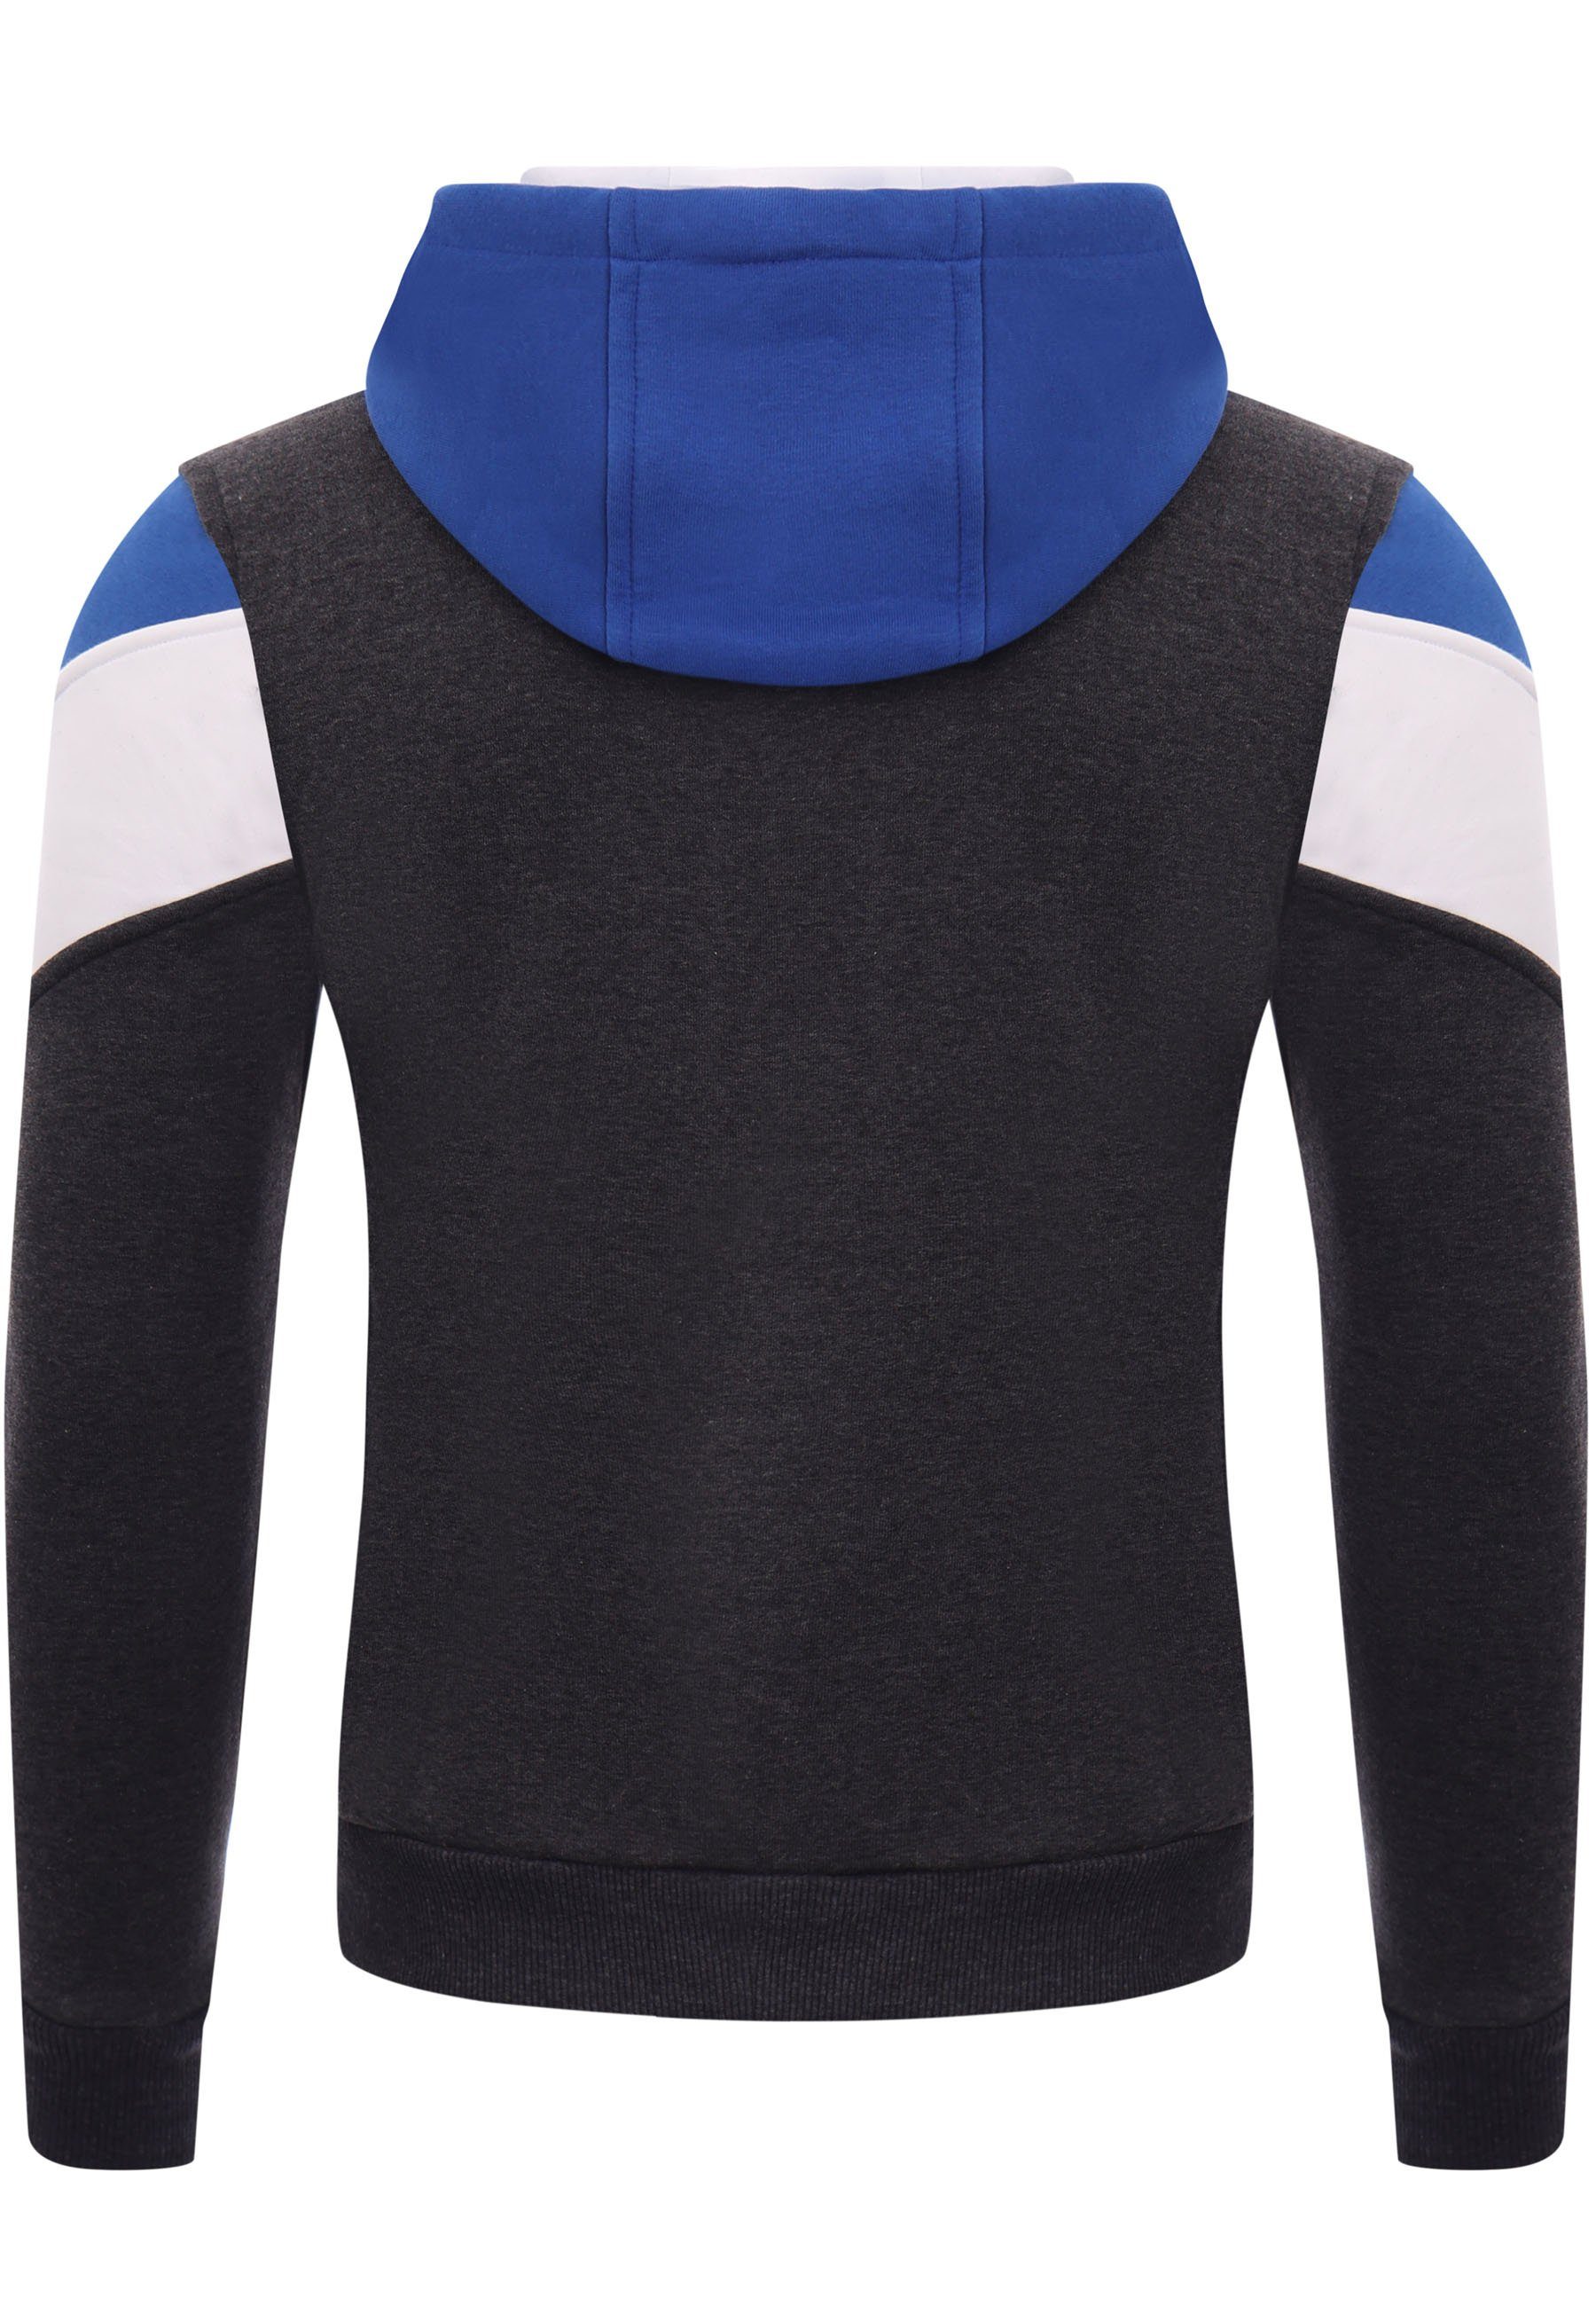 Sweatjacke RS-1007 Sweatjacke Pulli Winter-Pullover (1-tlg) Kapuzenpullover Zipper Sweatshirt Reslad Reslad Hoodie blau-schwarz Sweater